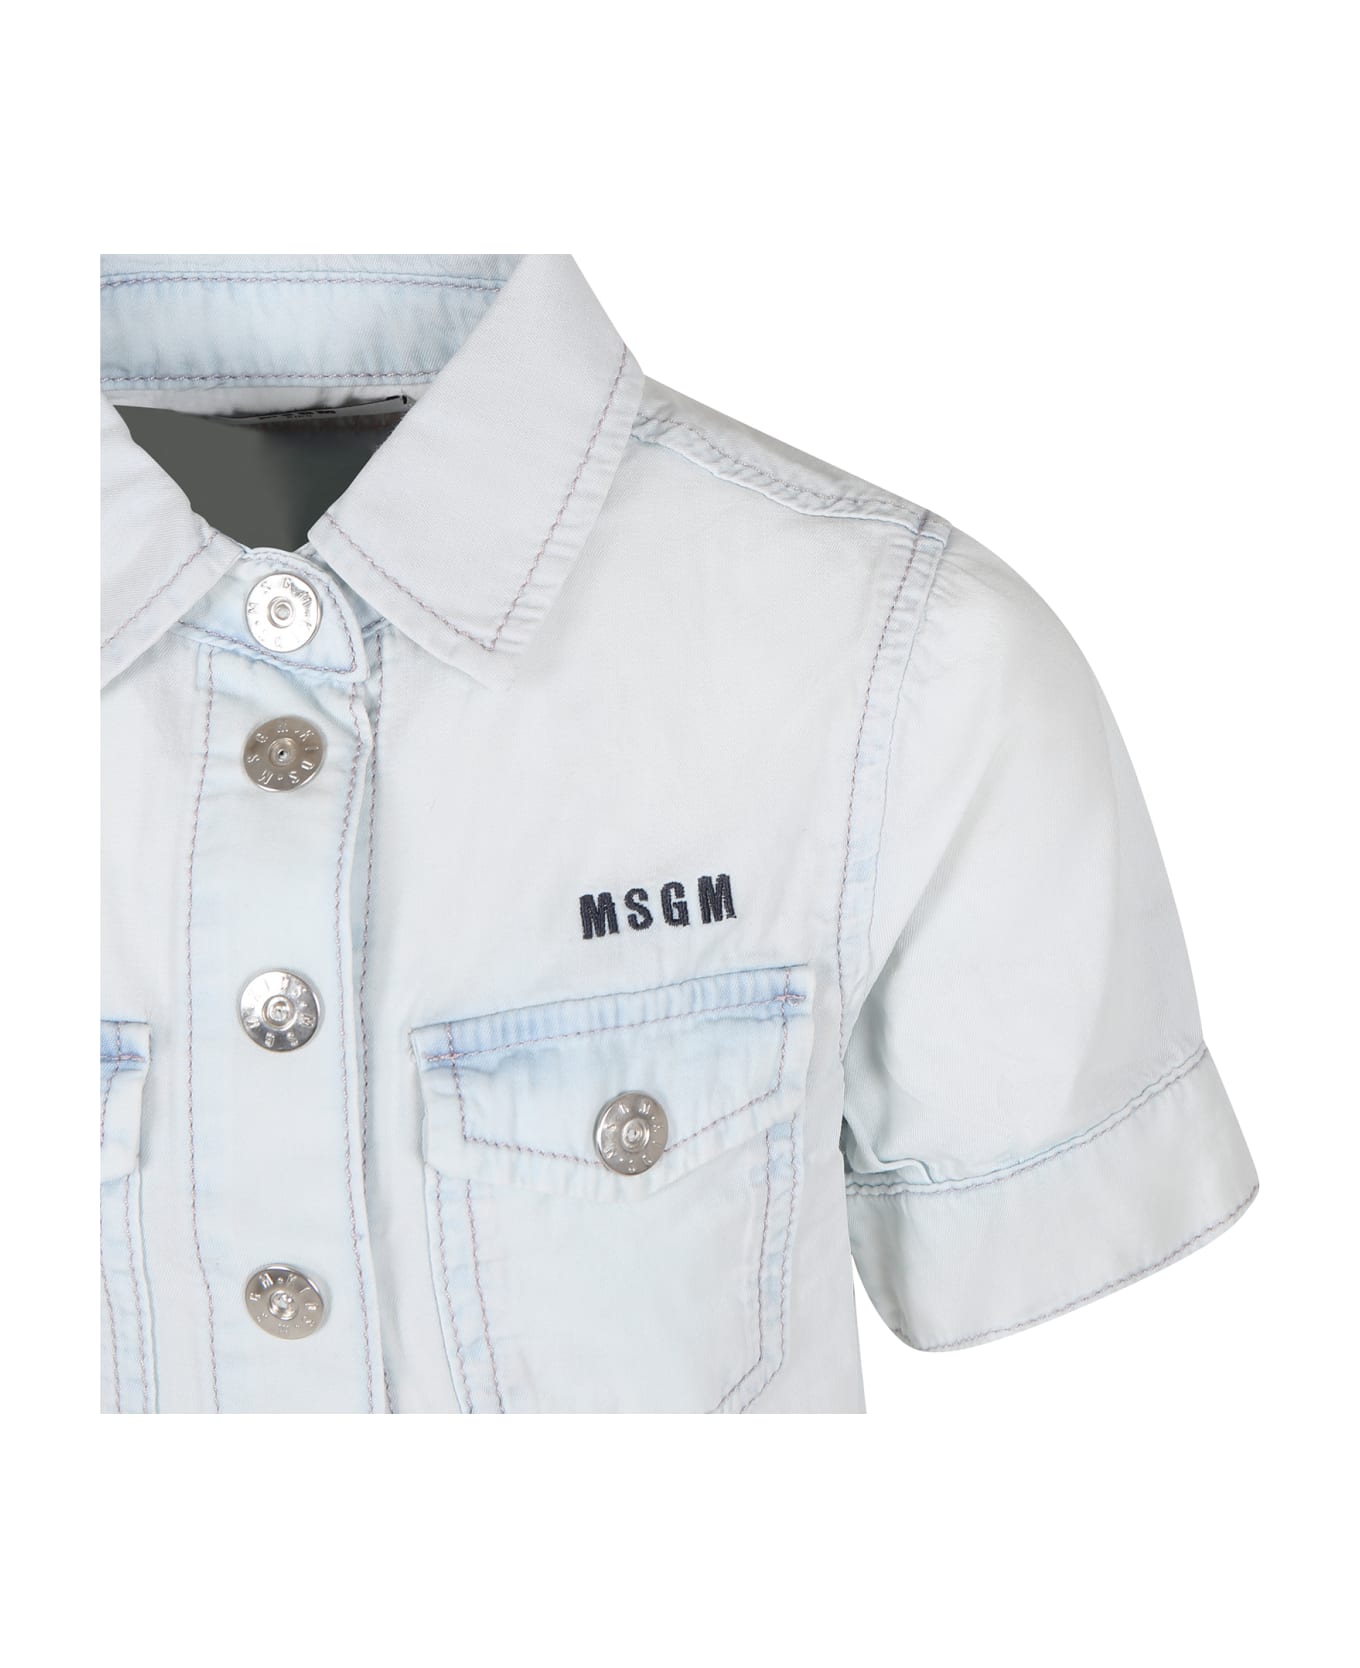 MSGM Light Blue Shirt For Girl With Logo - Denim